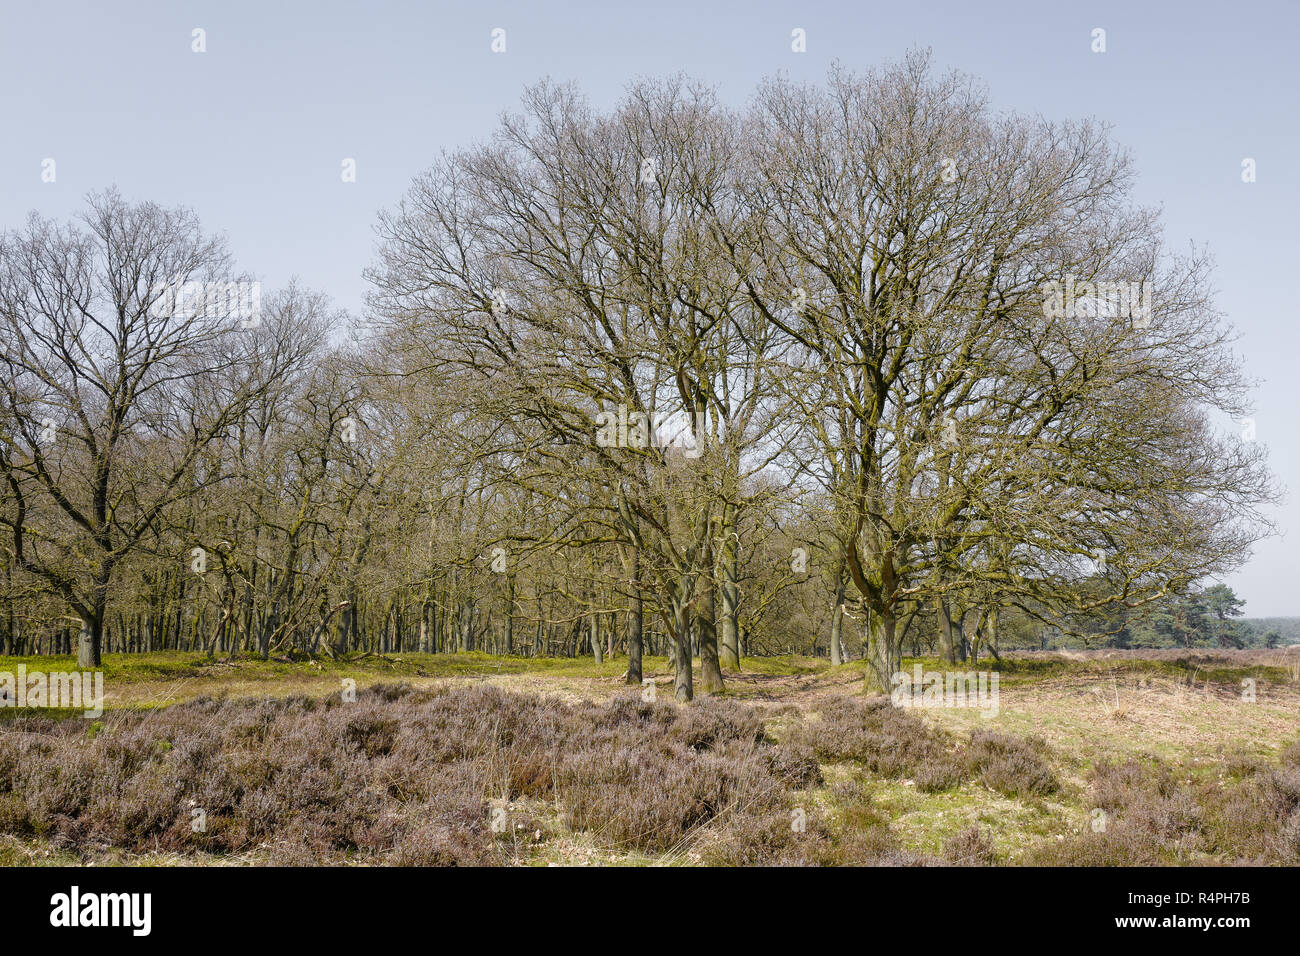 Heathland with oak trees in the Nationaal Park Hoge Veluwe, Netherlands. Stock Photo